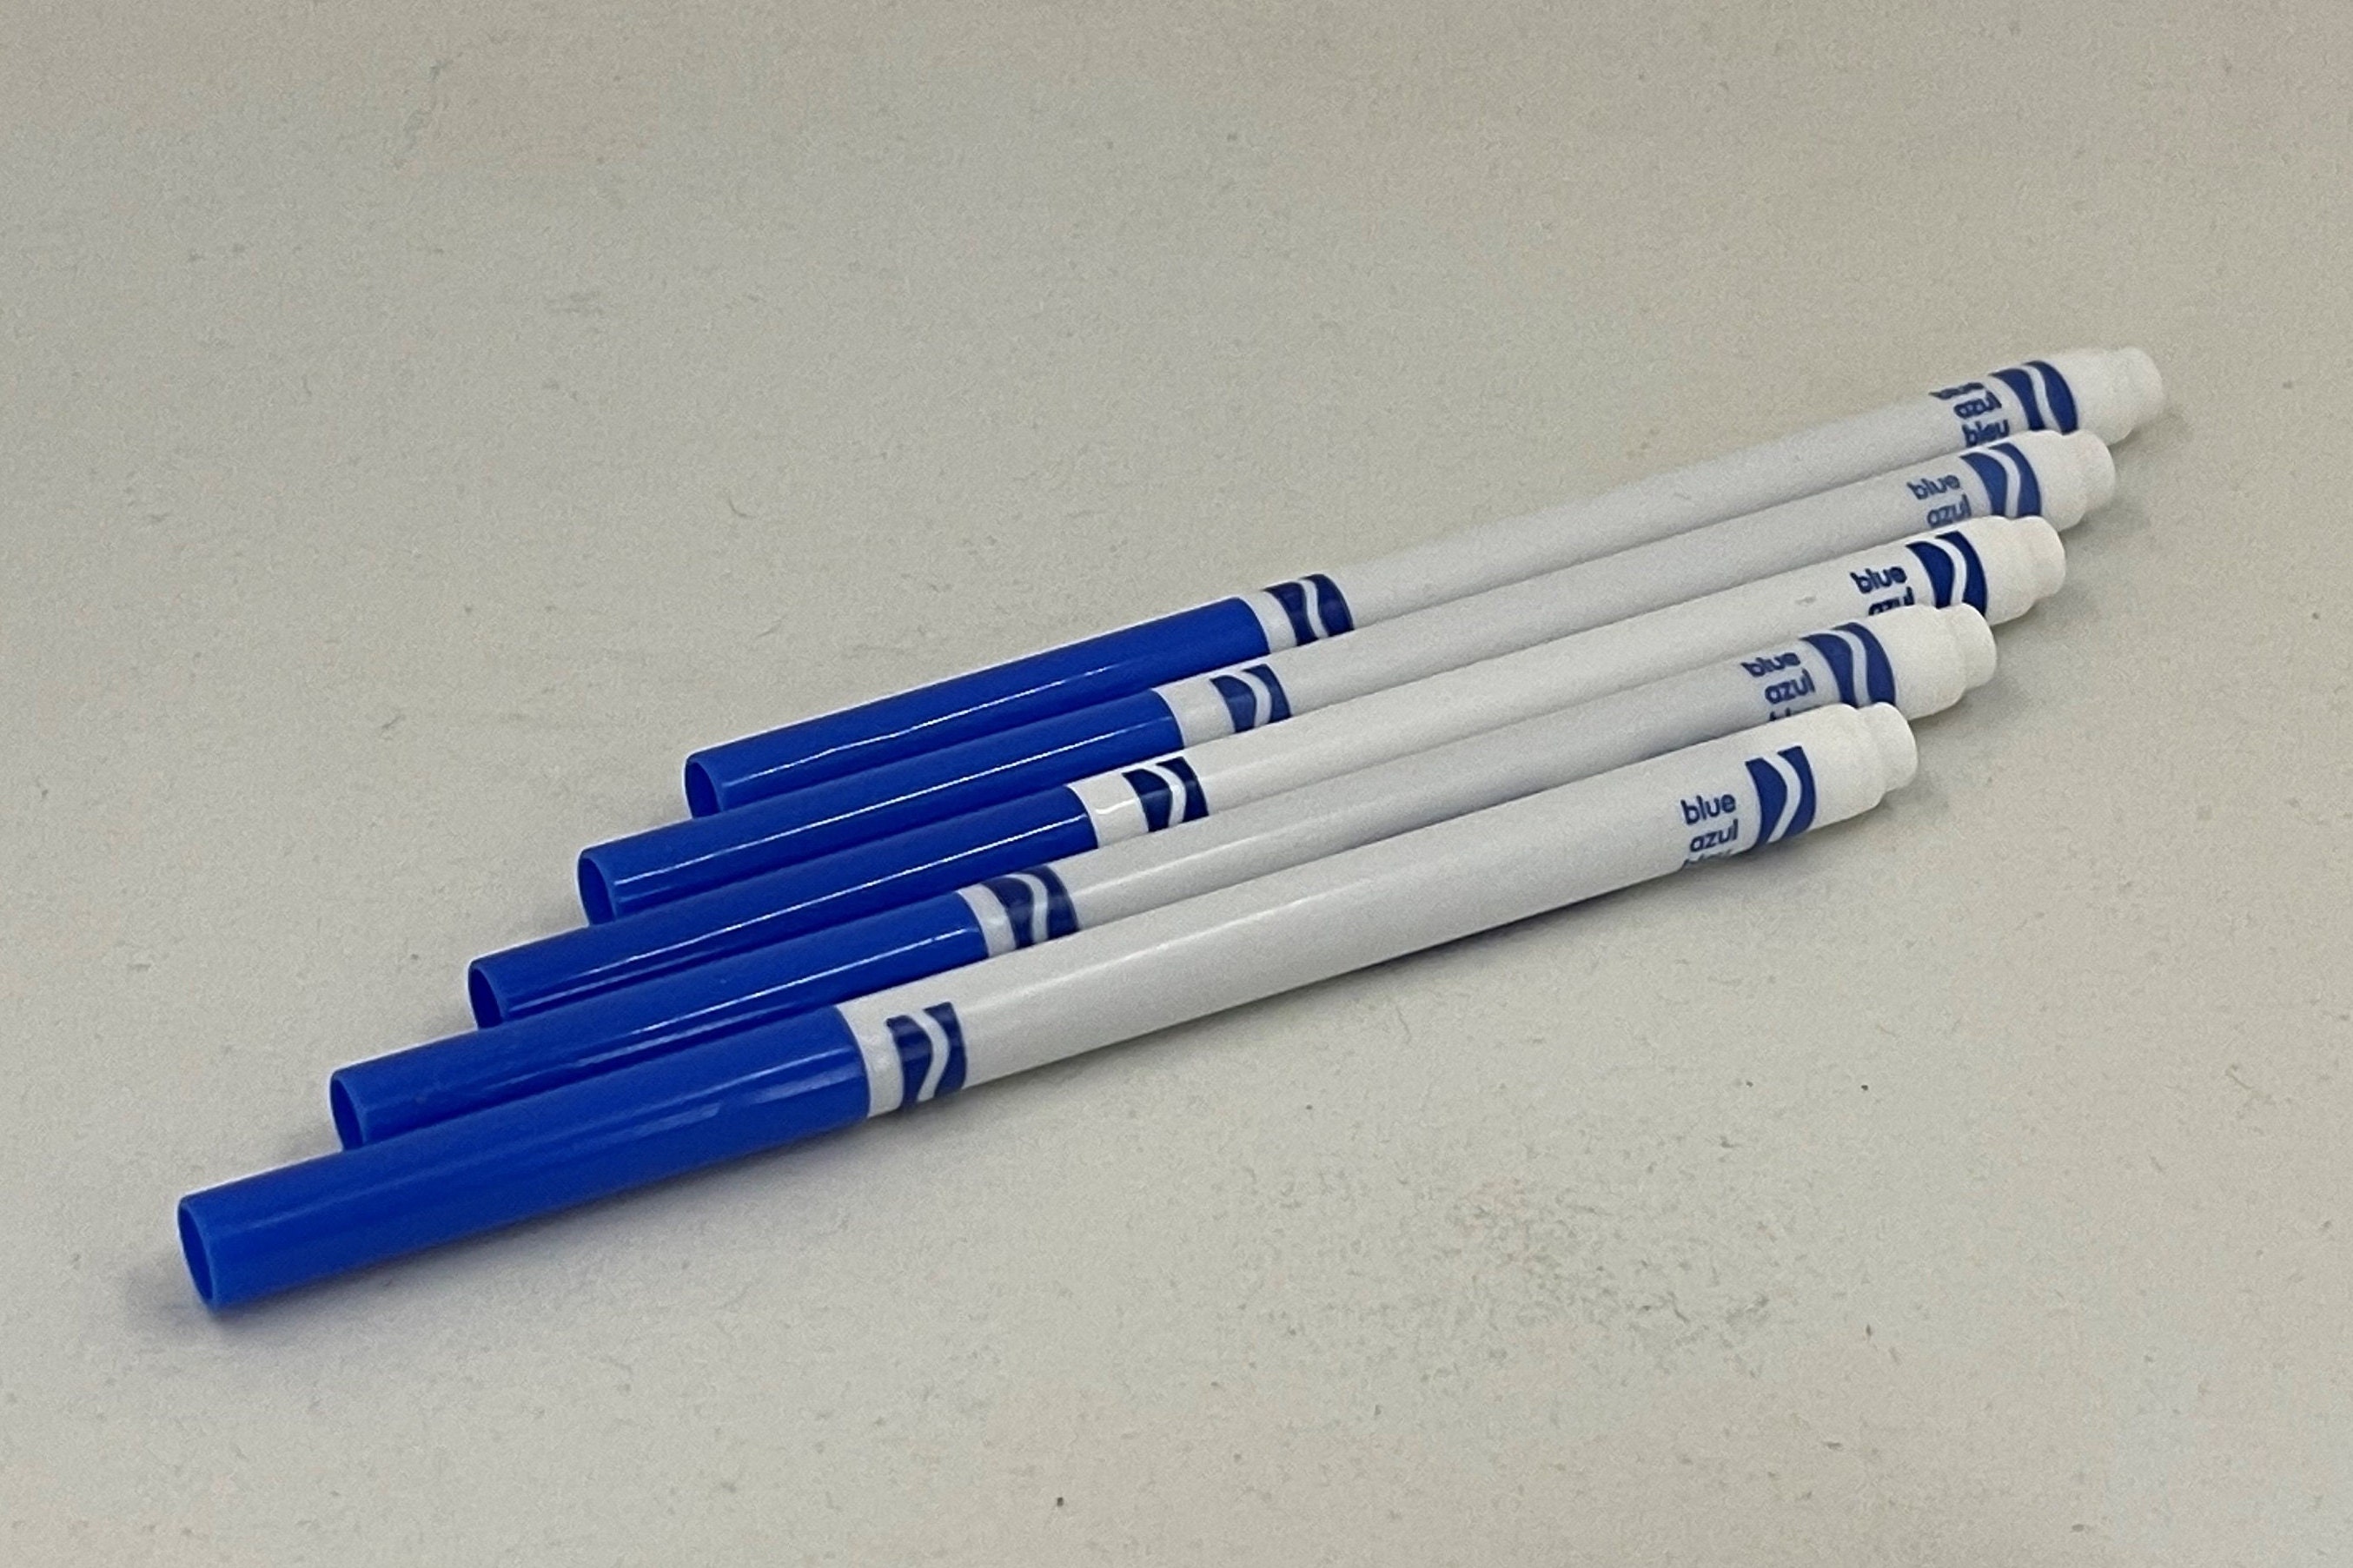  Crayola Fine Line Markers Bulk, School Supplies for